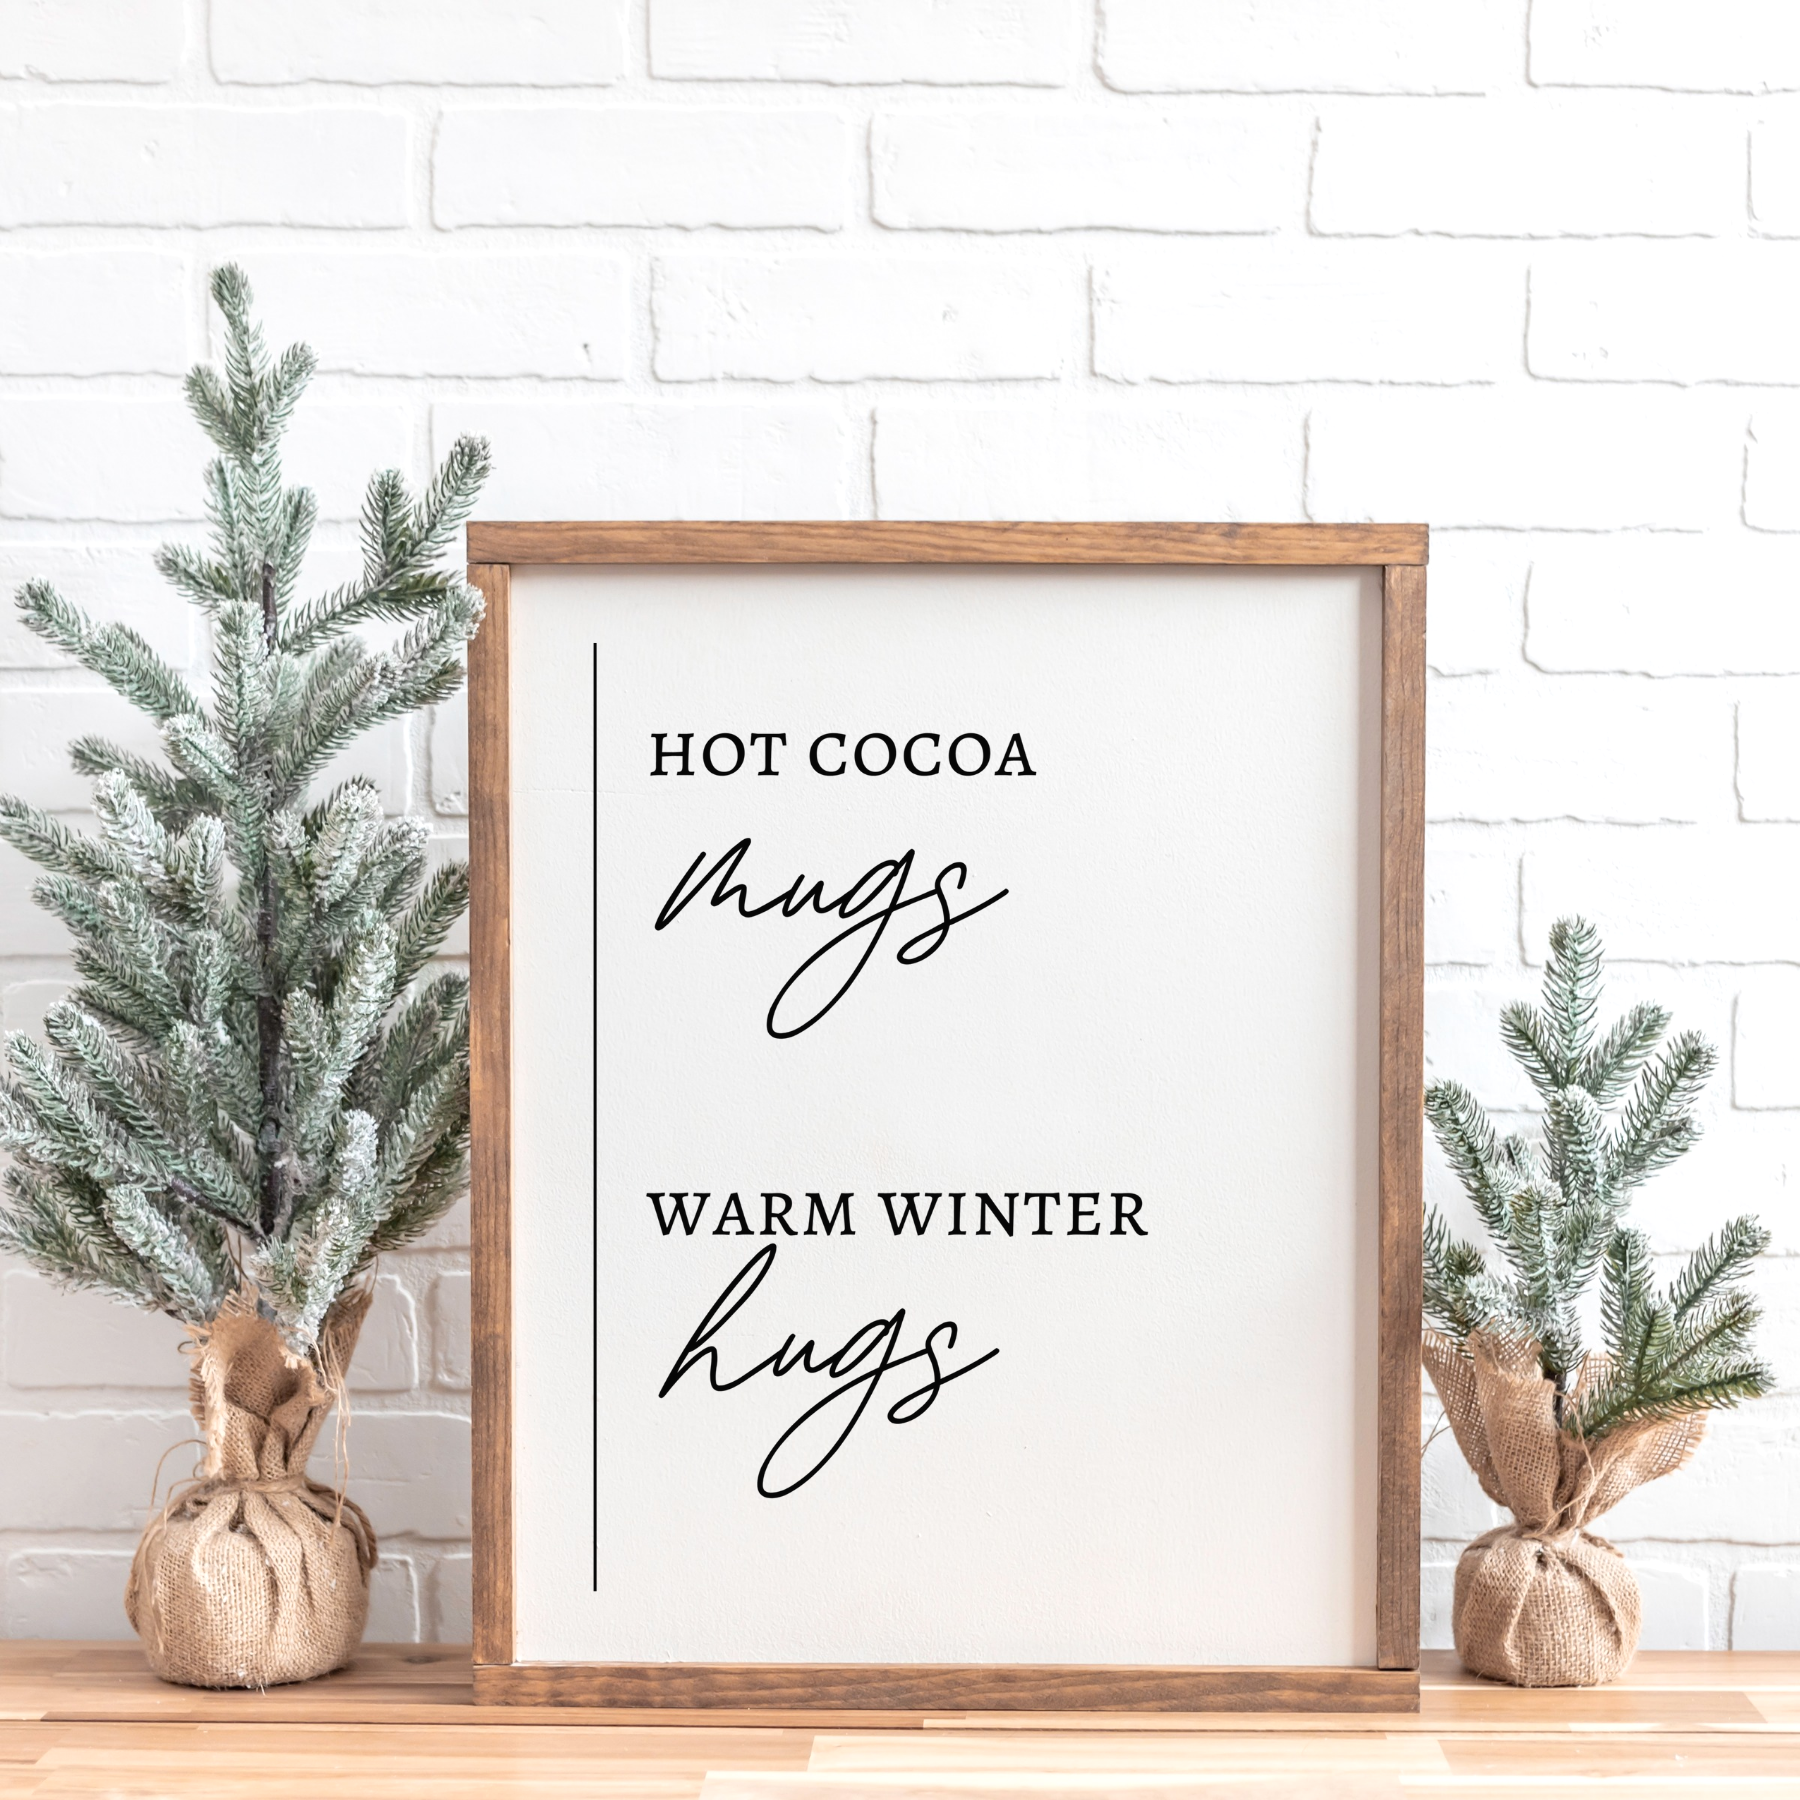 Hot cocoa mugs - Affiche décorative